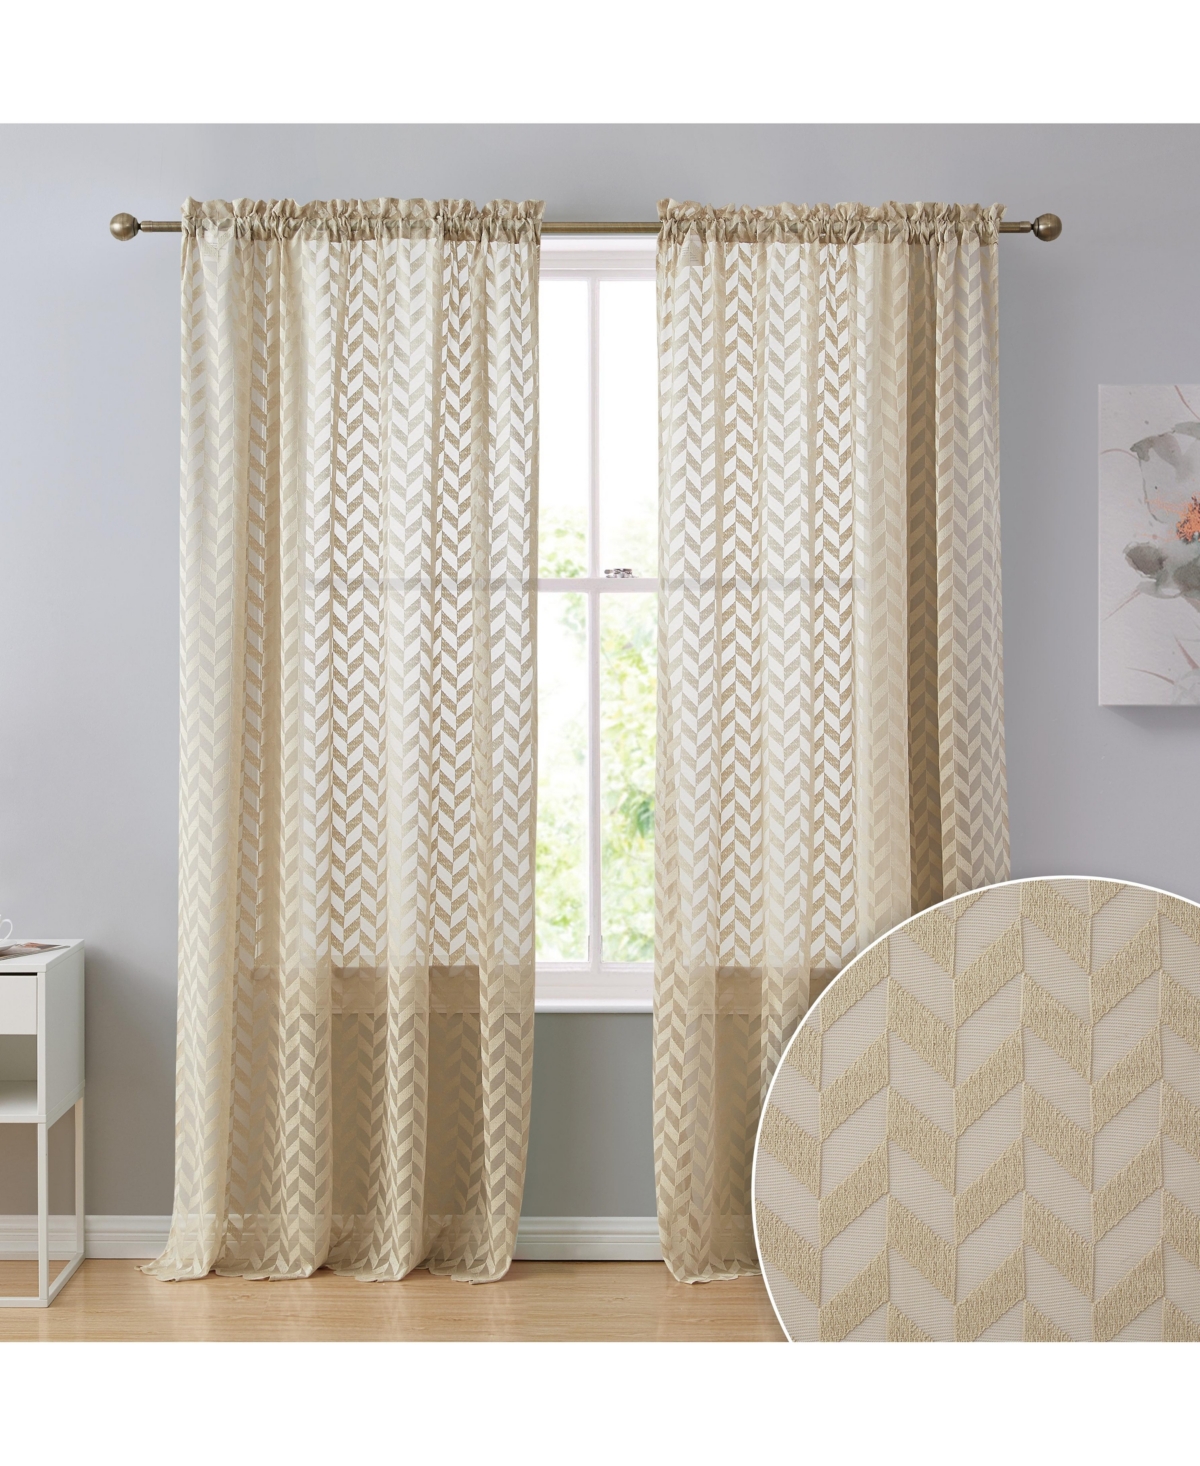 Herringbone Thick Semi Sheer Premium Rod Pocket Window Curtain Panels for Bedroom & Living Room - Set of 2 - Taupe